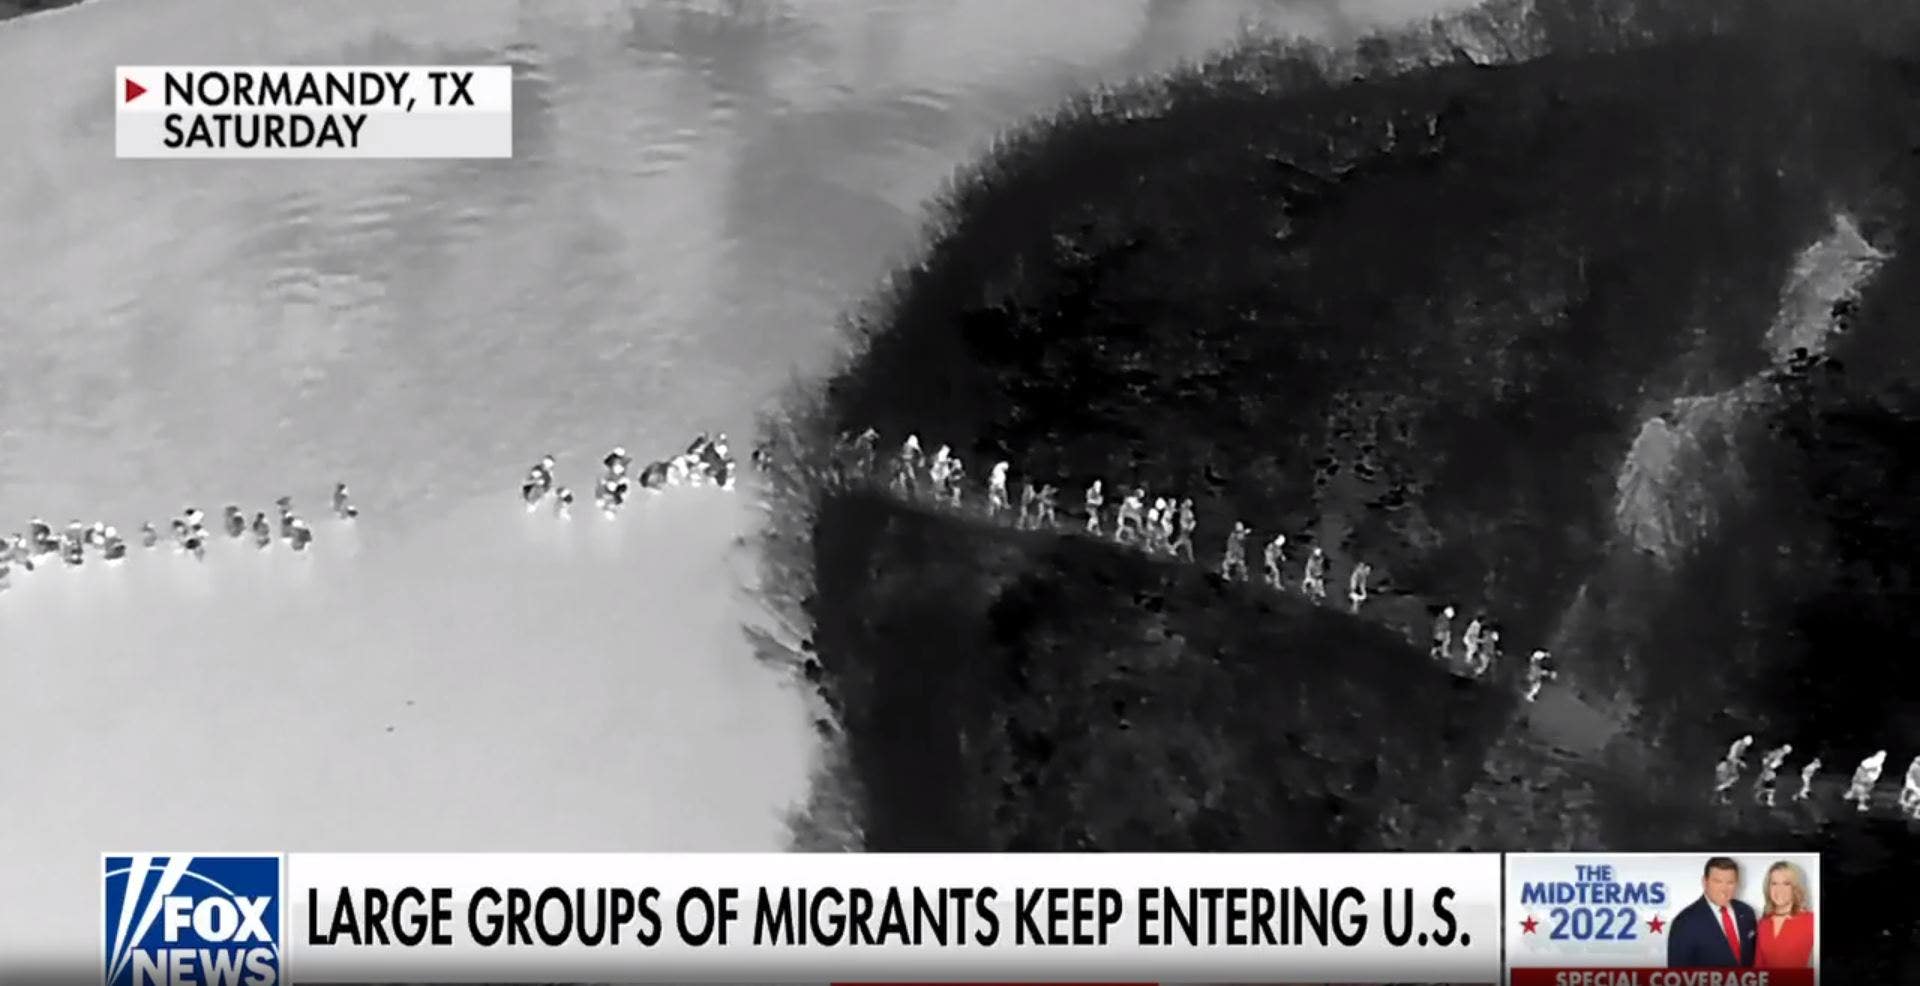  Drone footage shows streams of migrants cross border into Texas 'with no resistance' 